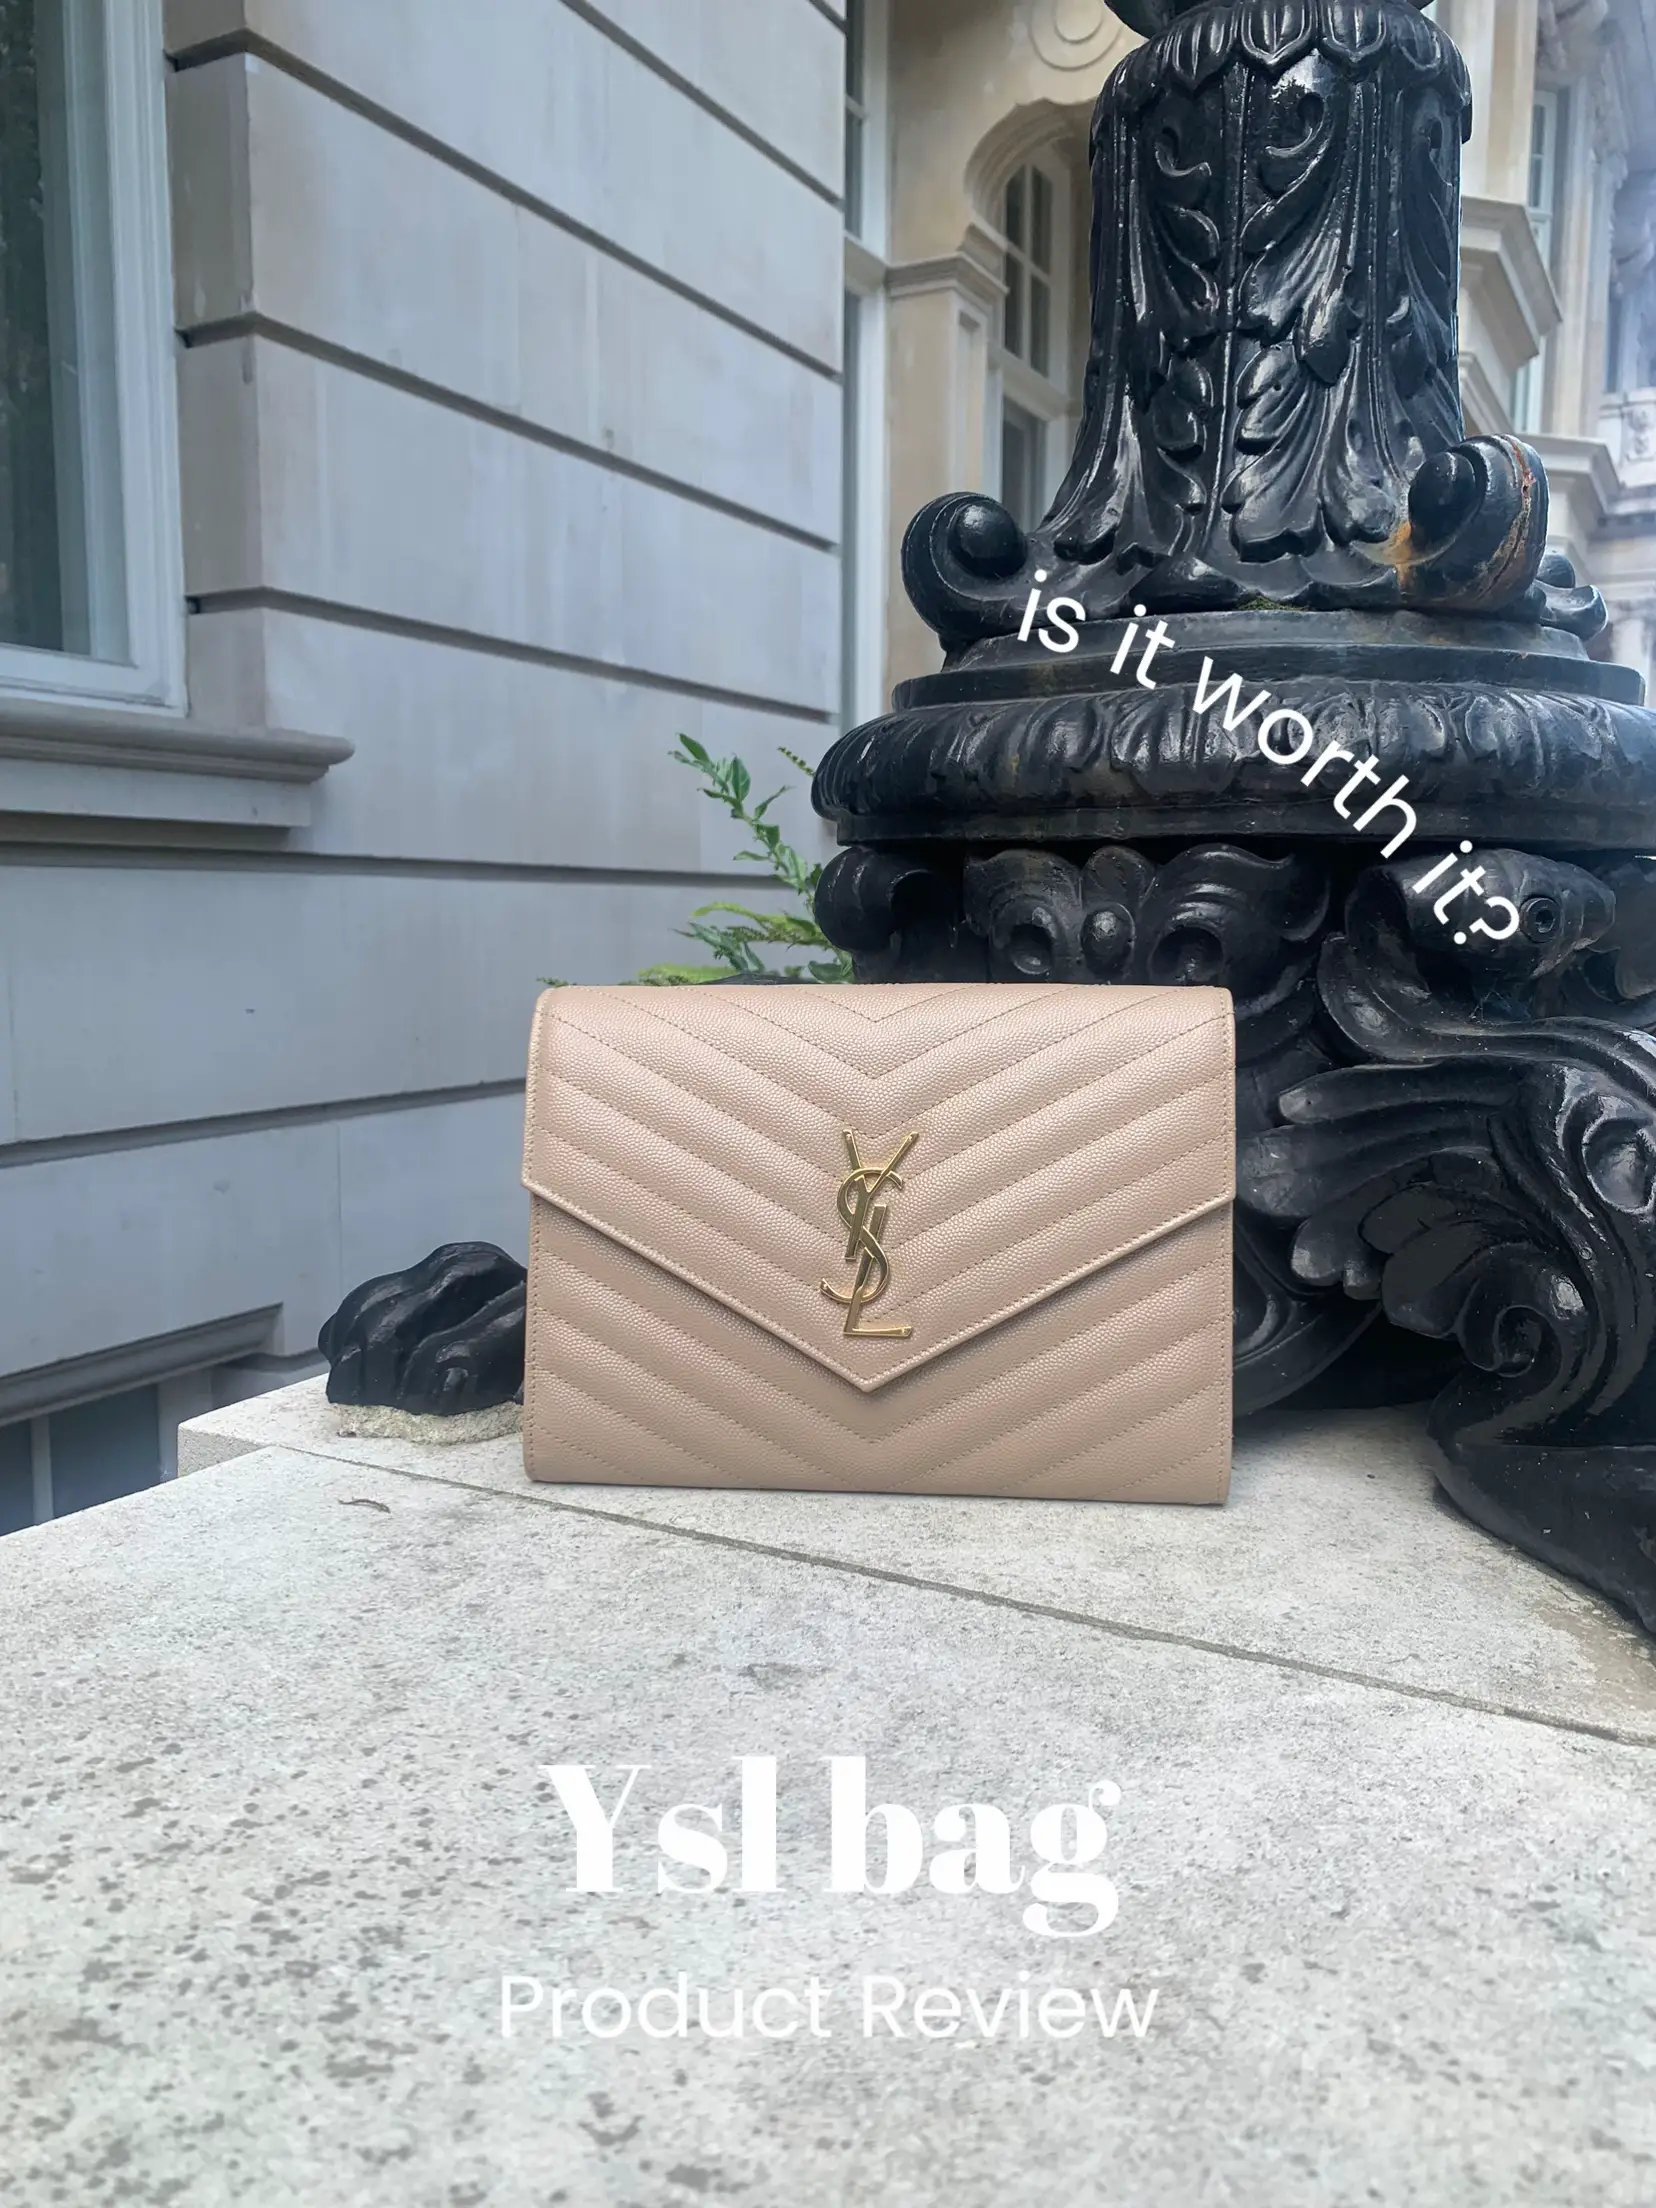 Ysl bag, honest review, Gallery posted by Kavveeta